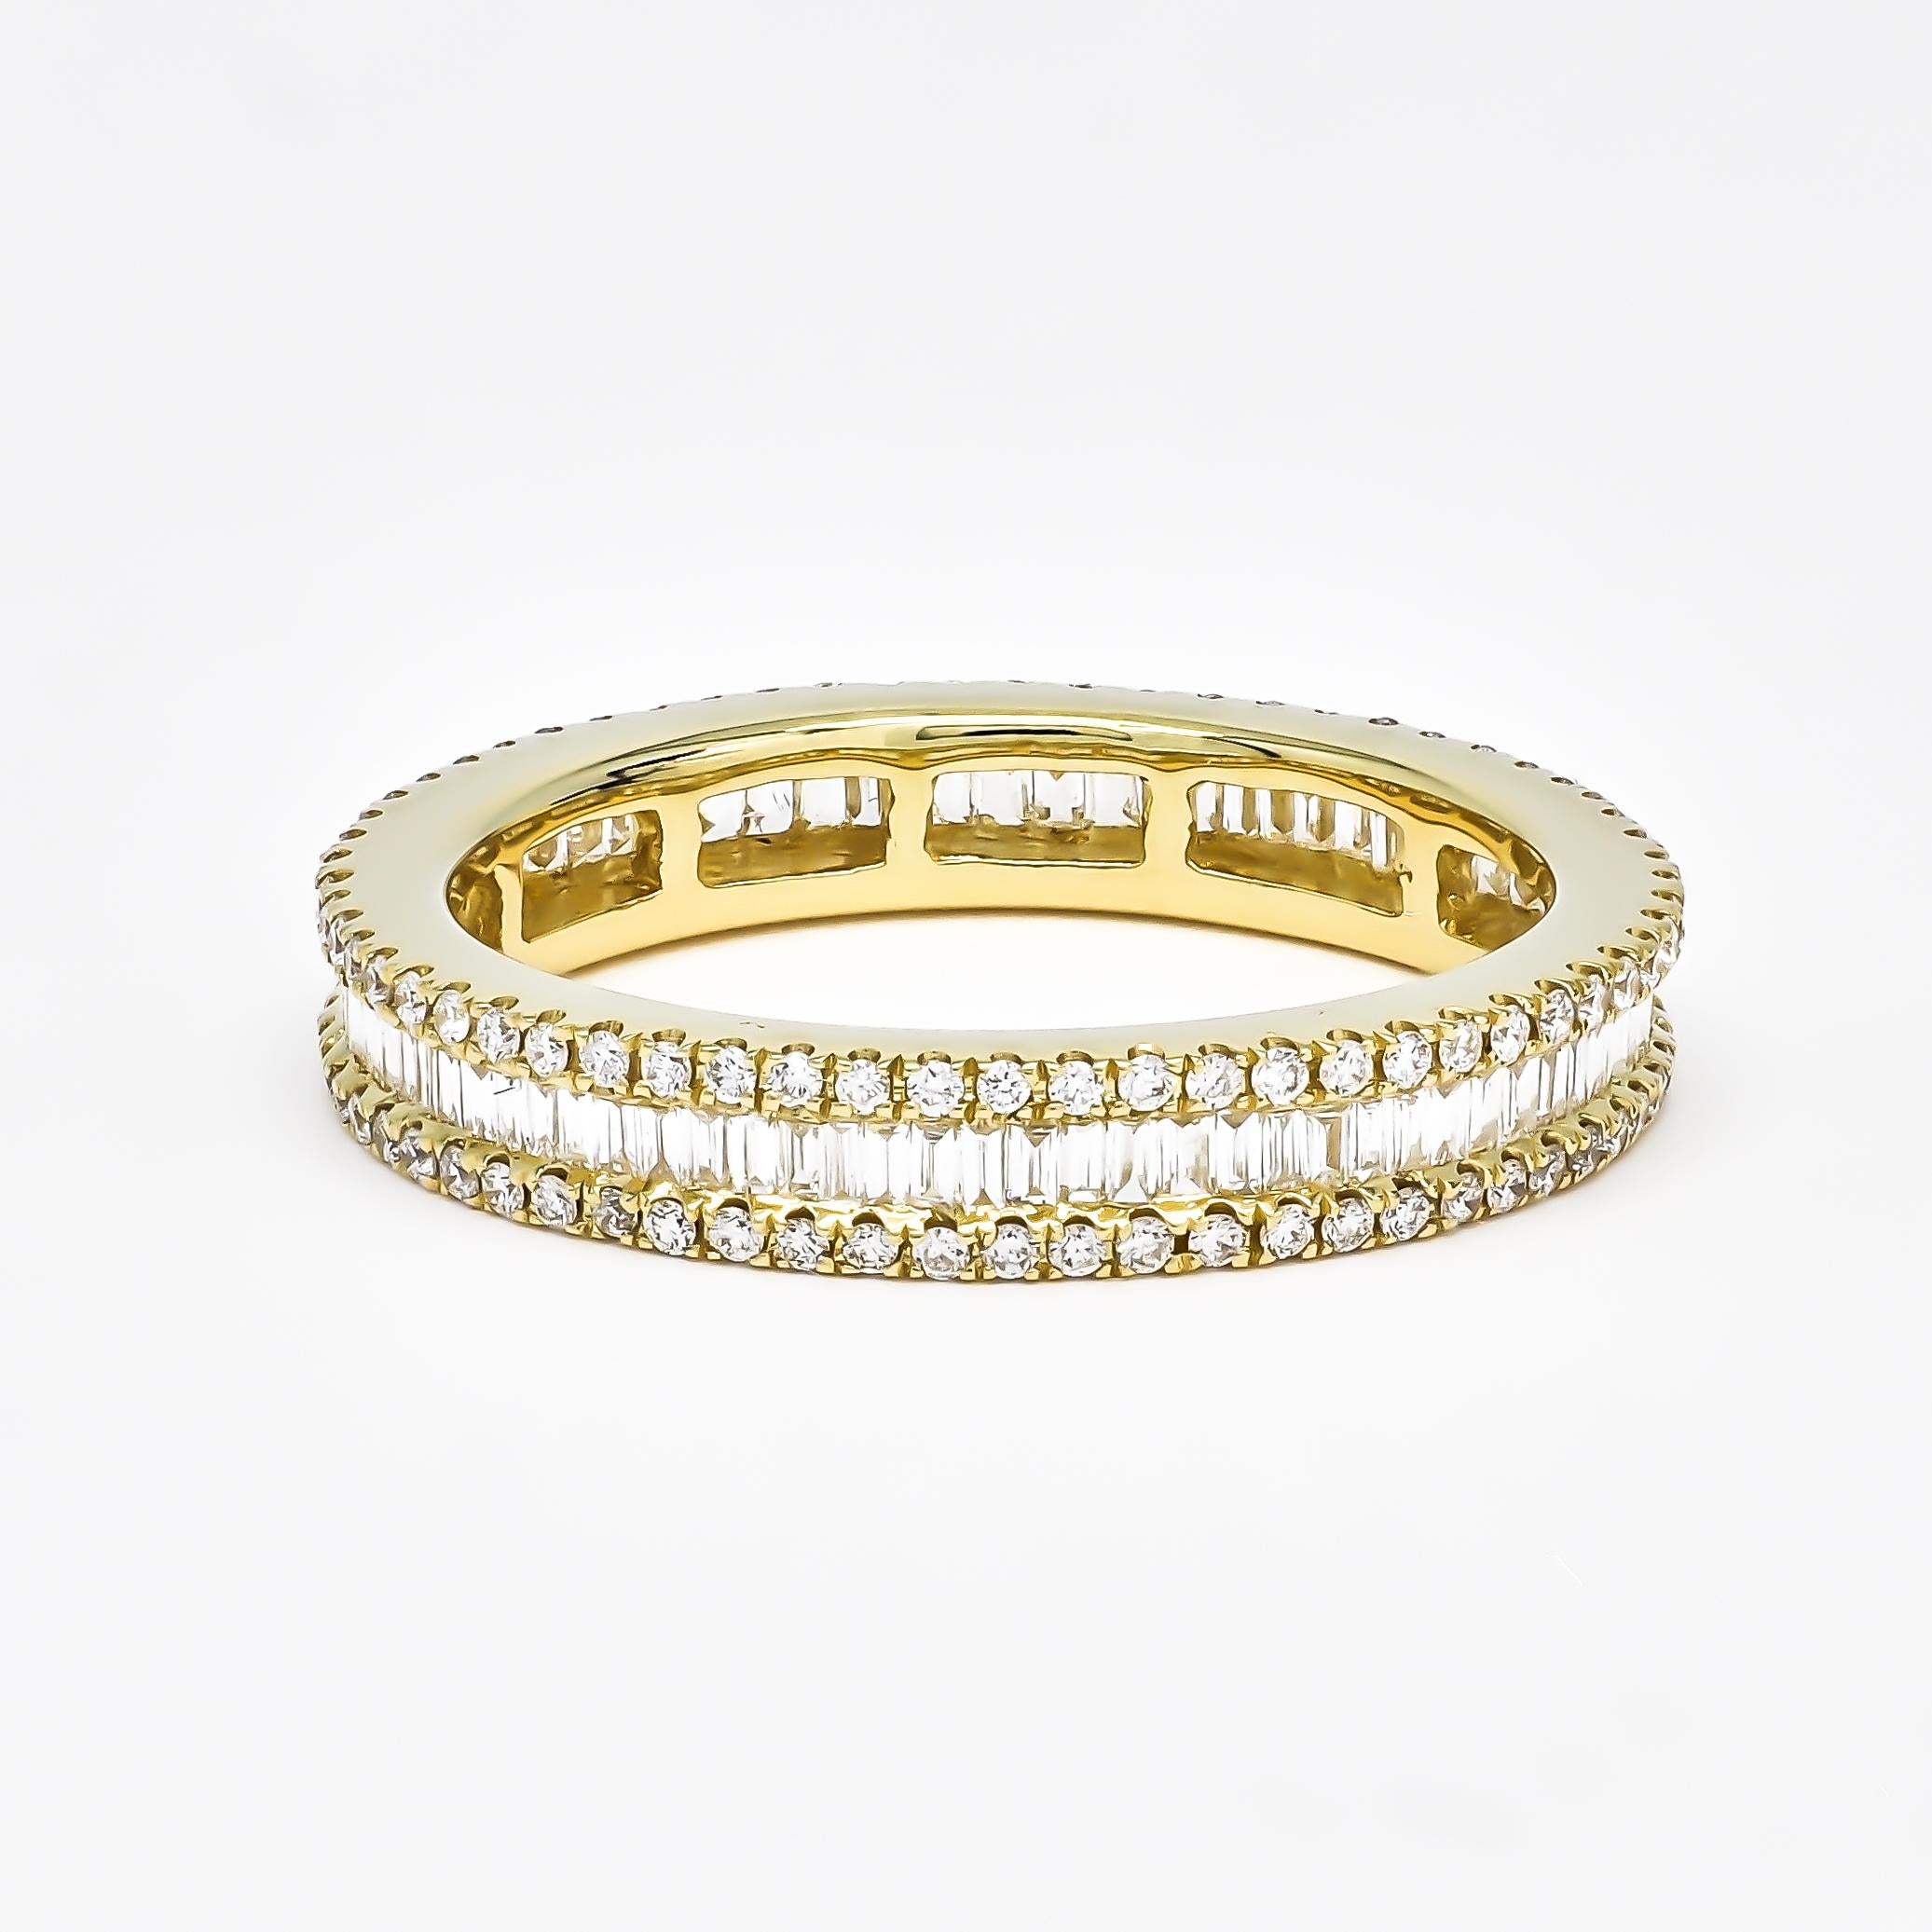 Art Deco 18 Kt Gold Baguette Round Diamond Eternity Full Wedding Anniversary Band Ring